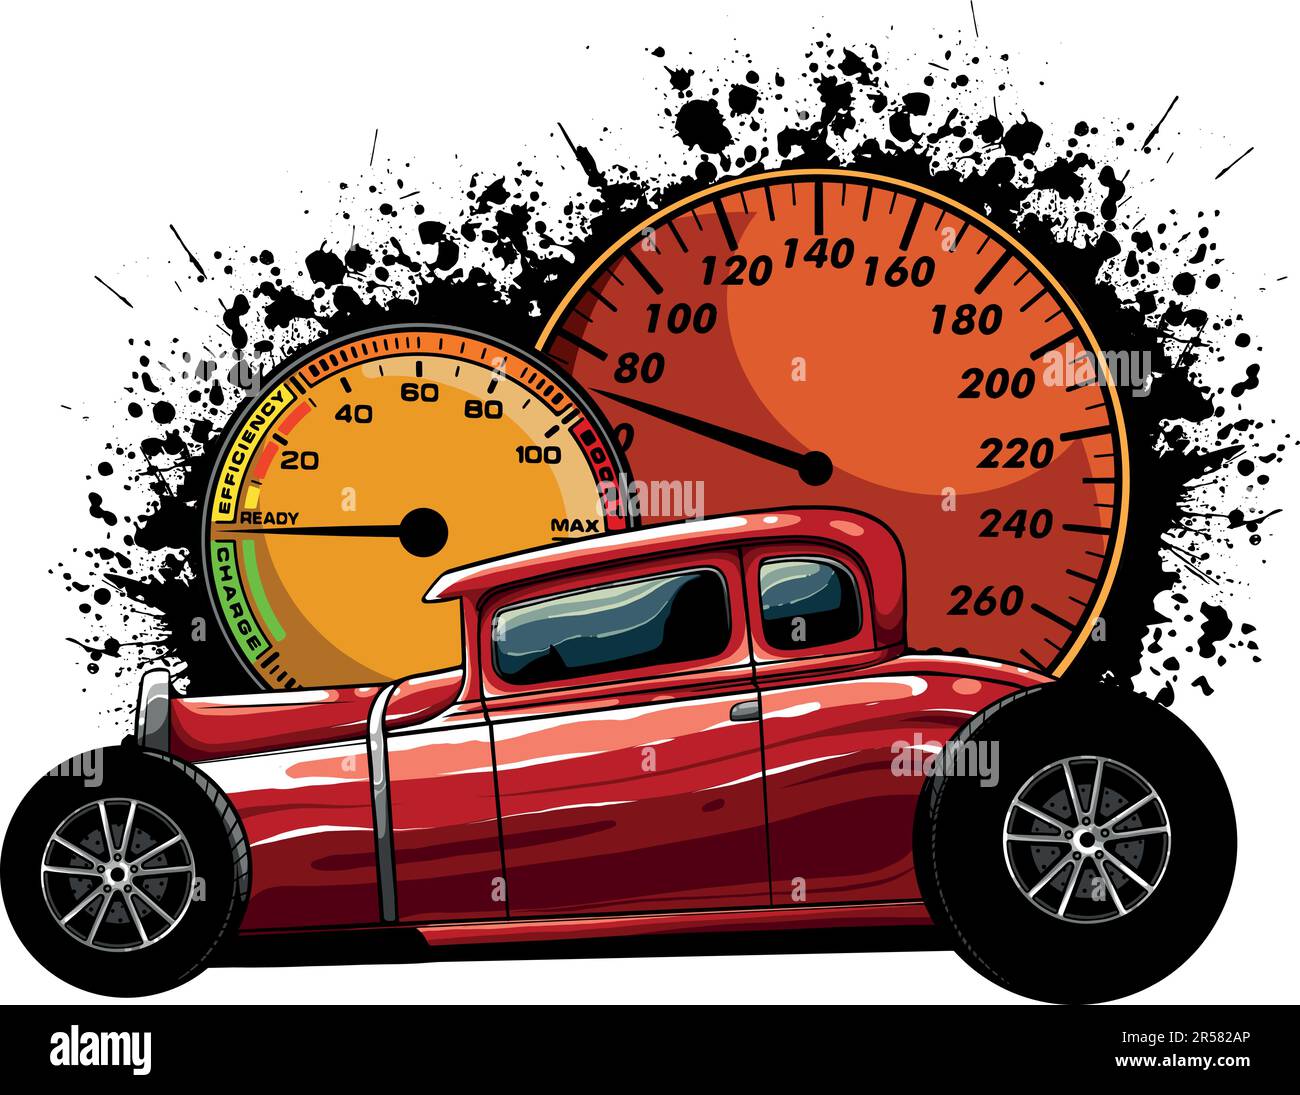 vector illustration of american hot rod car Stock Vector